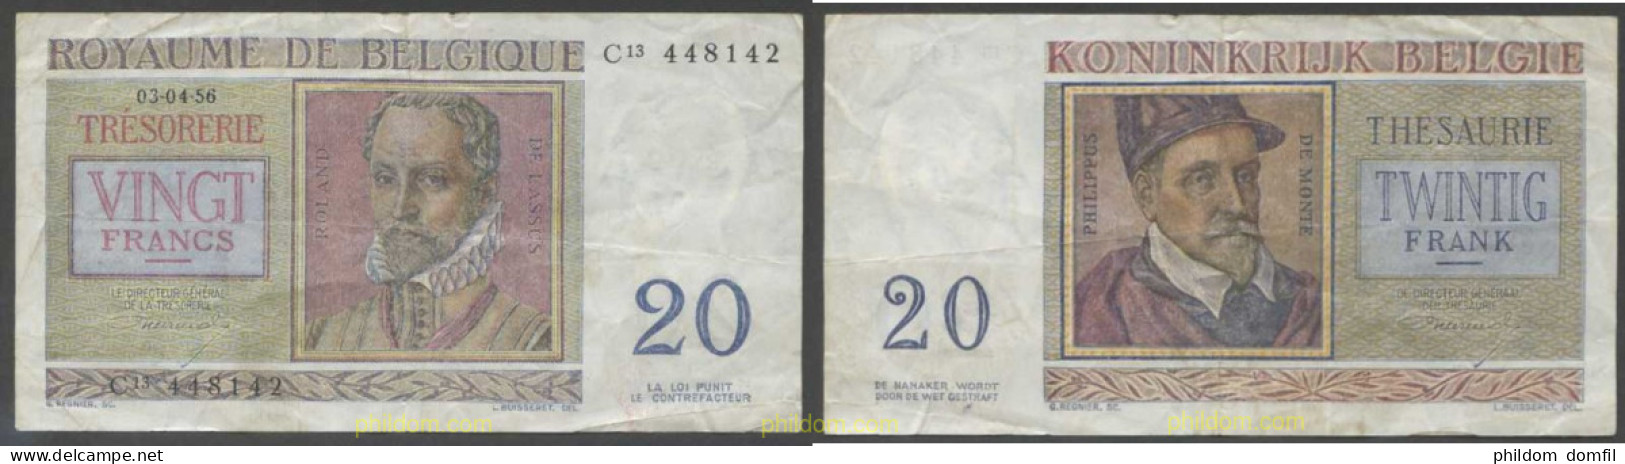 7889 BELGICA 1956 BELGIQUE 20 FRANCS 1956 - Colecciones